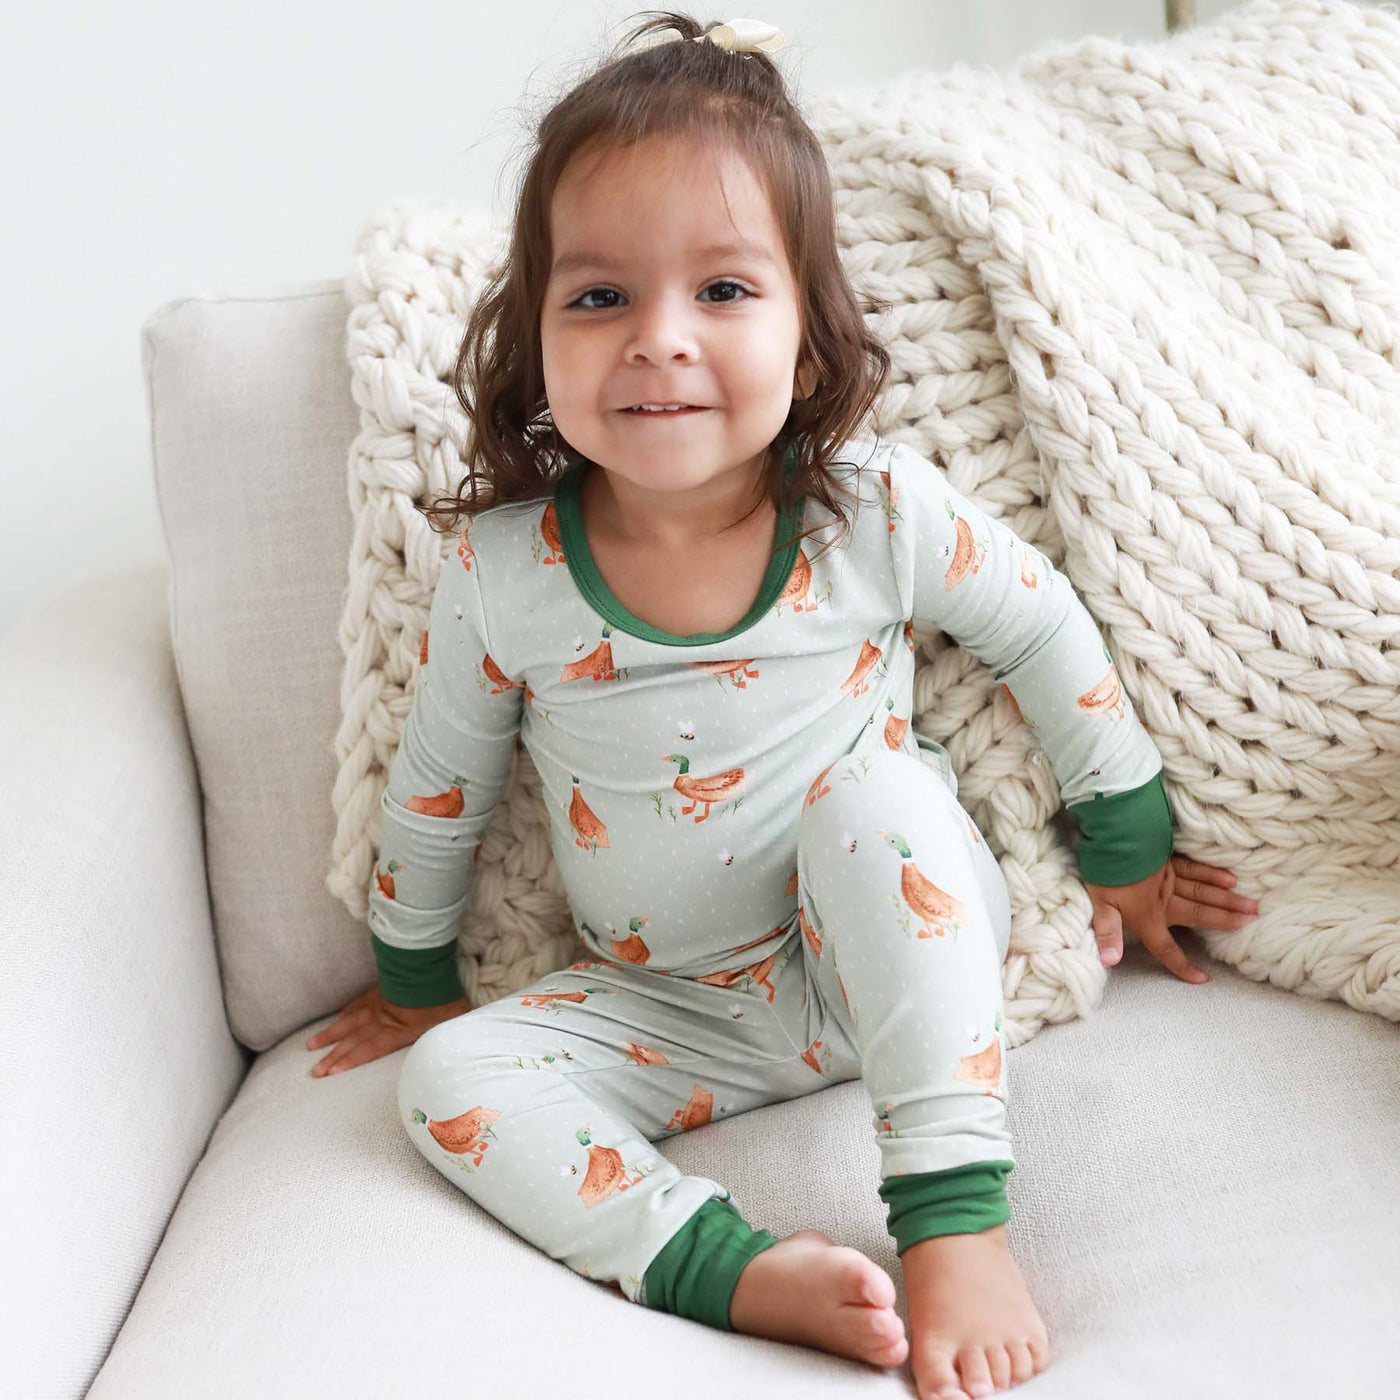 Duck Duck Moose Kids Pajama Set